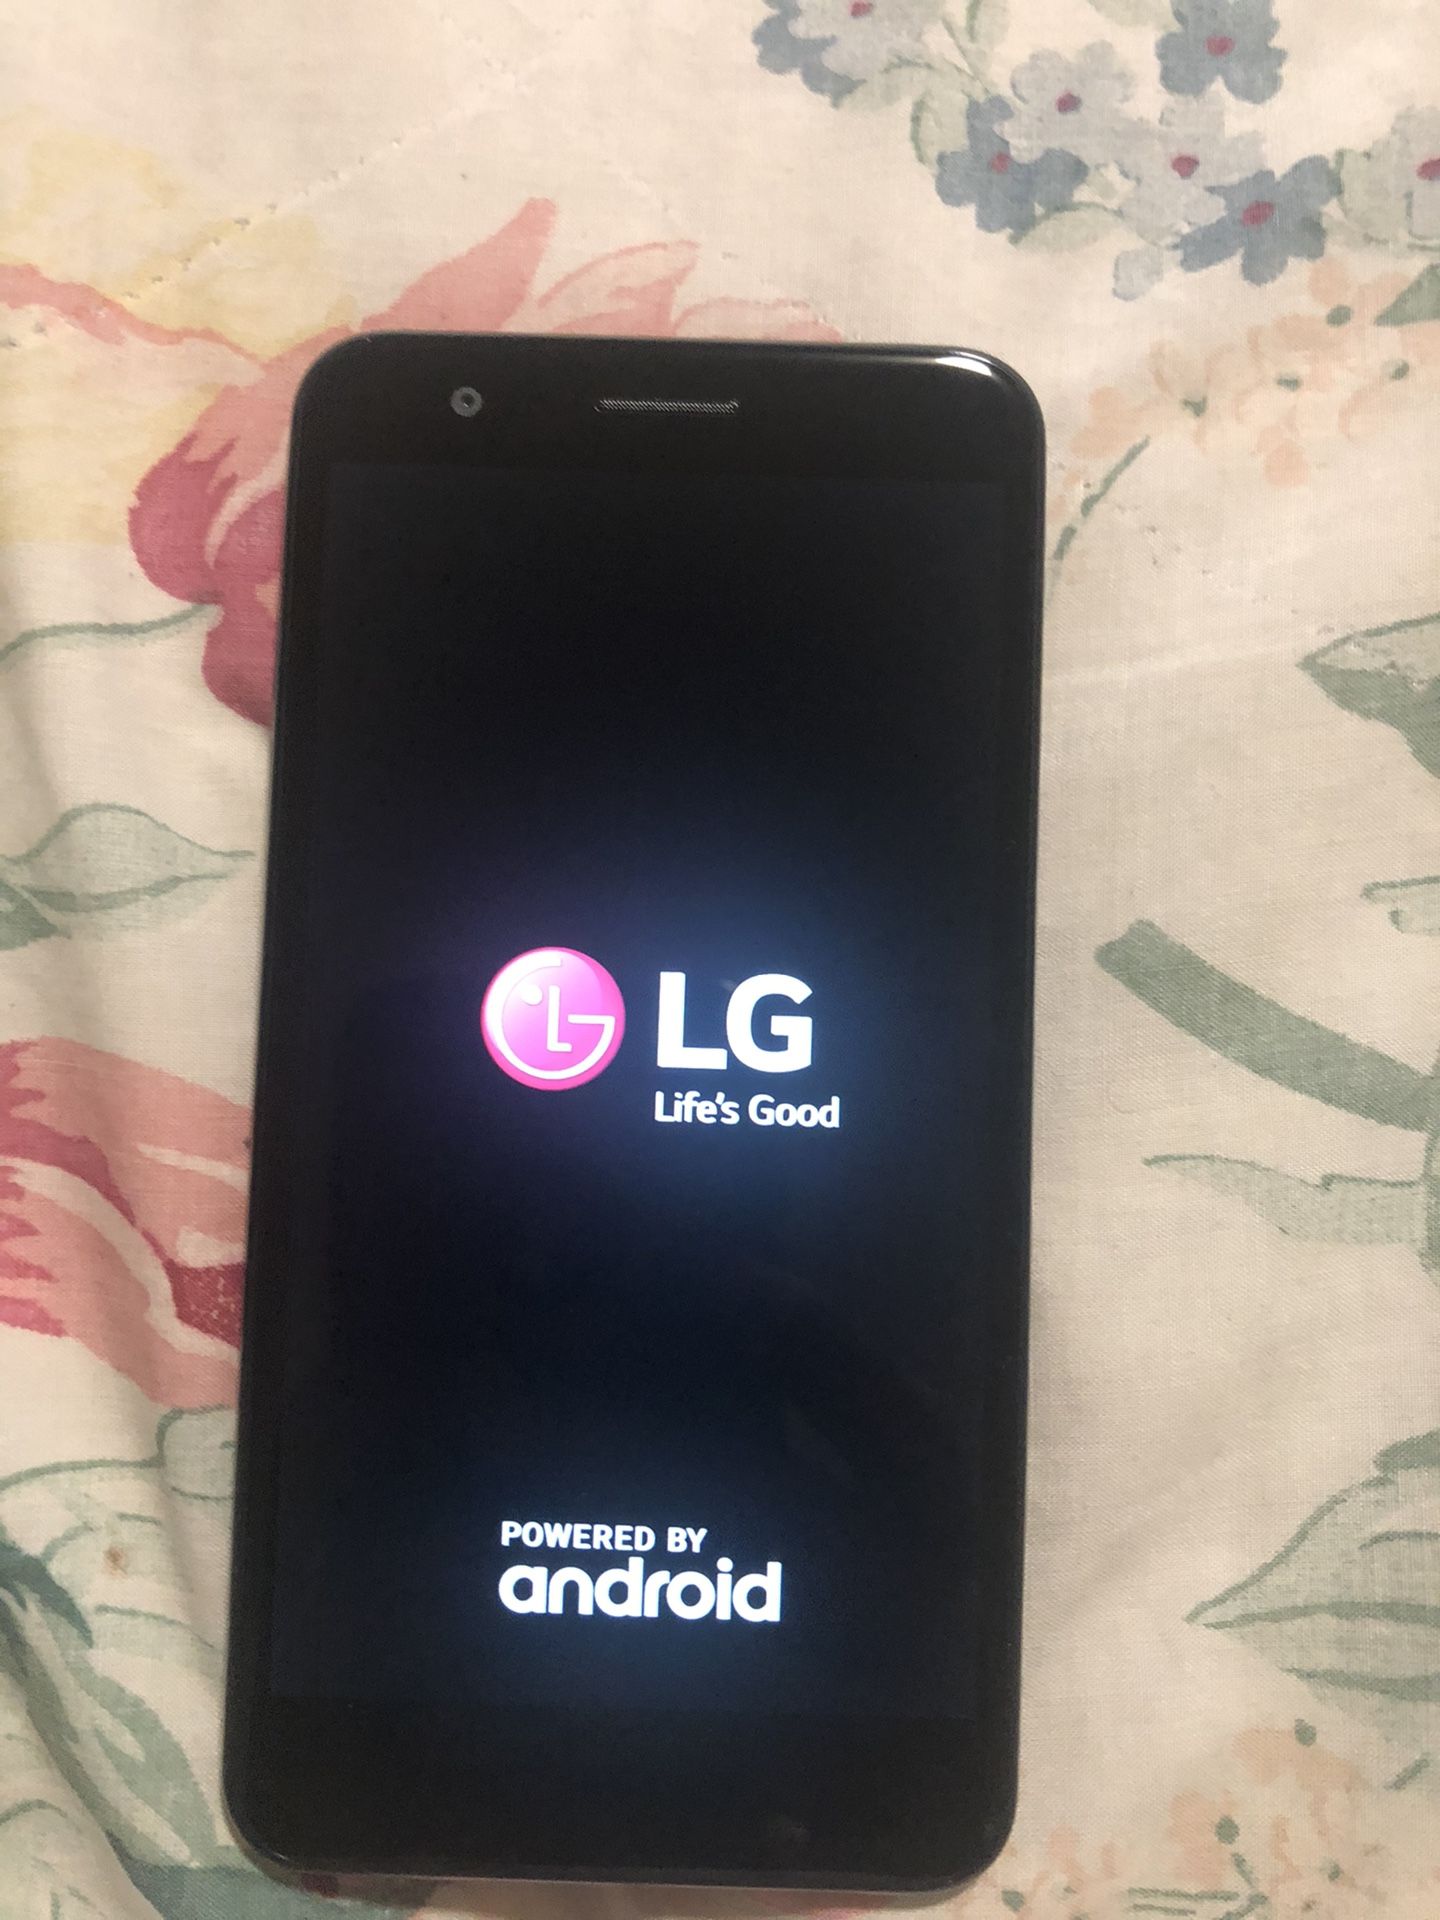 LG android Metro PCS